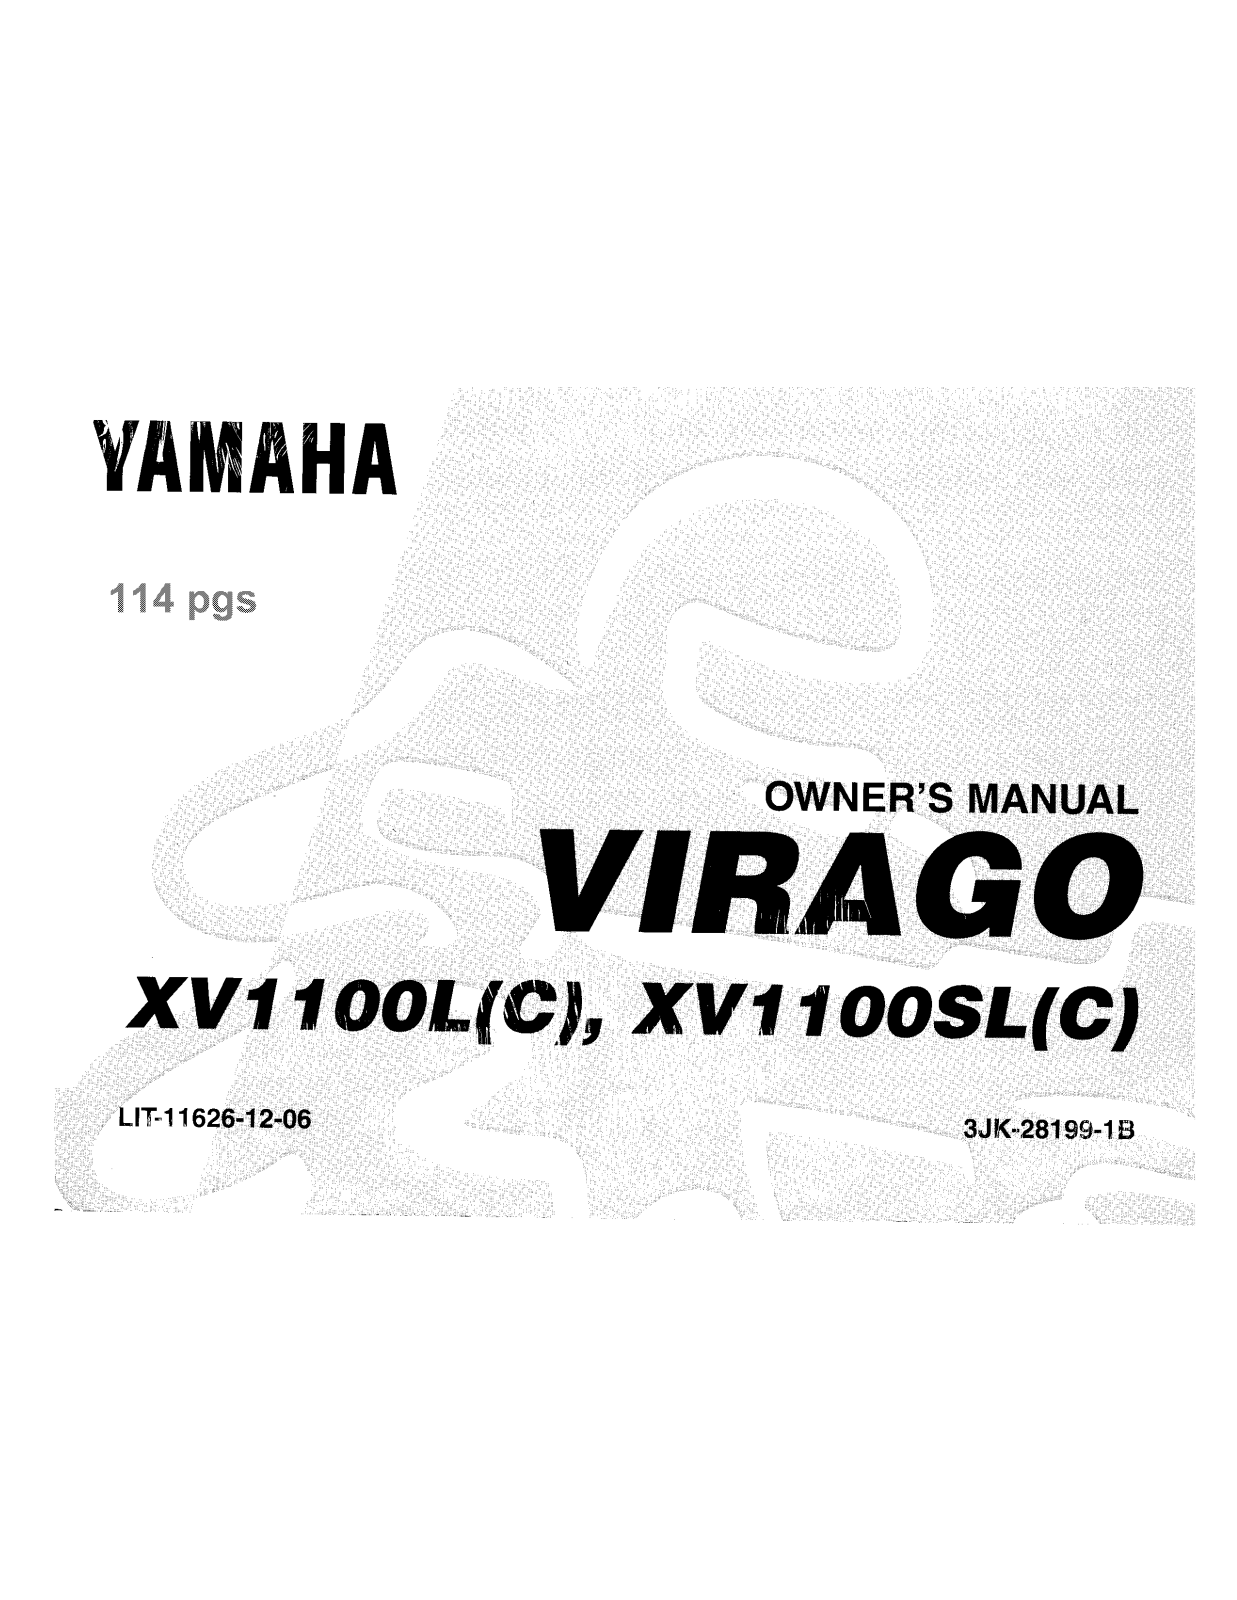 Yamaha VIRAGO 1100 Manual